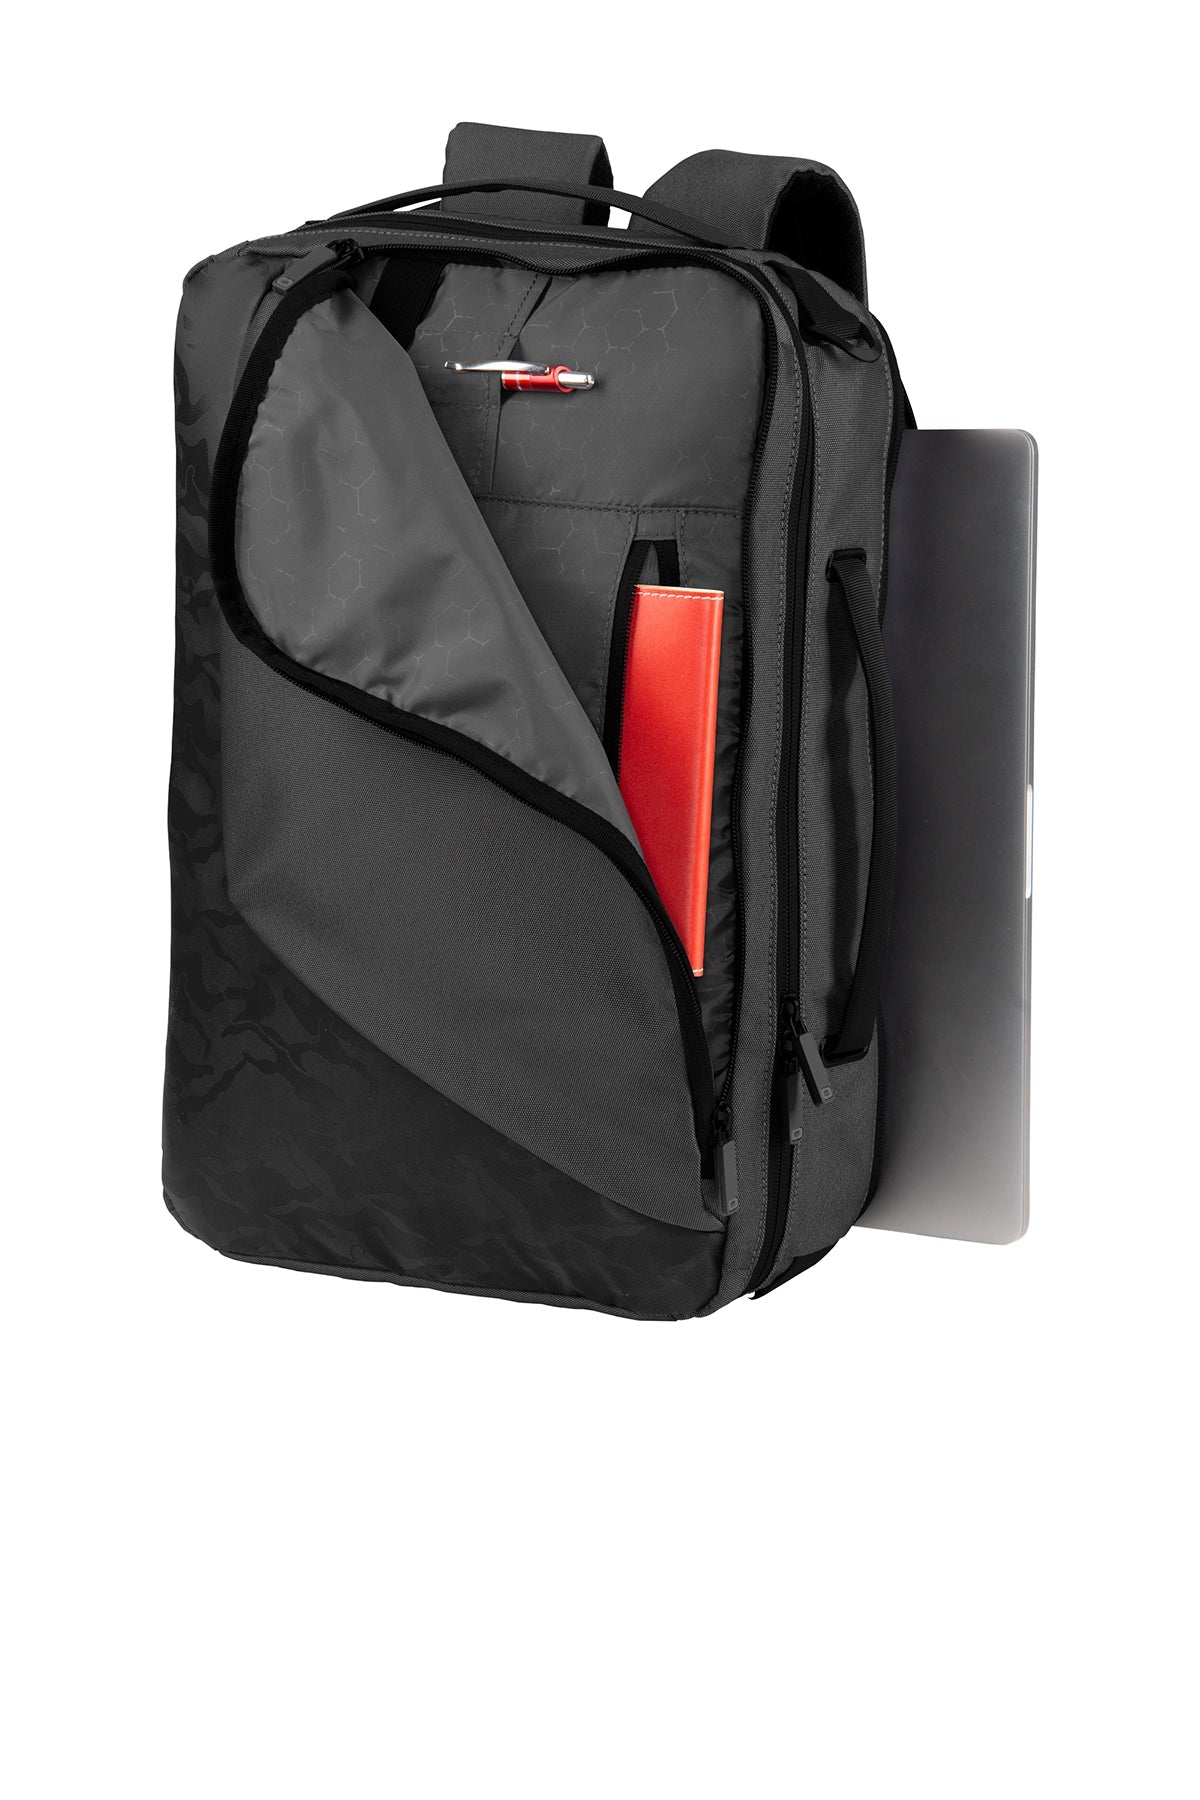 OGIO Convert Customzied Backpacks, Tarmac